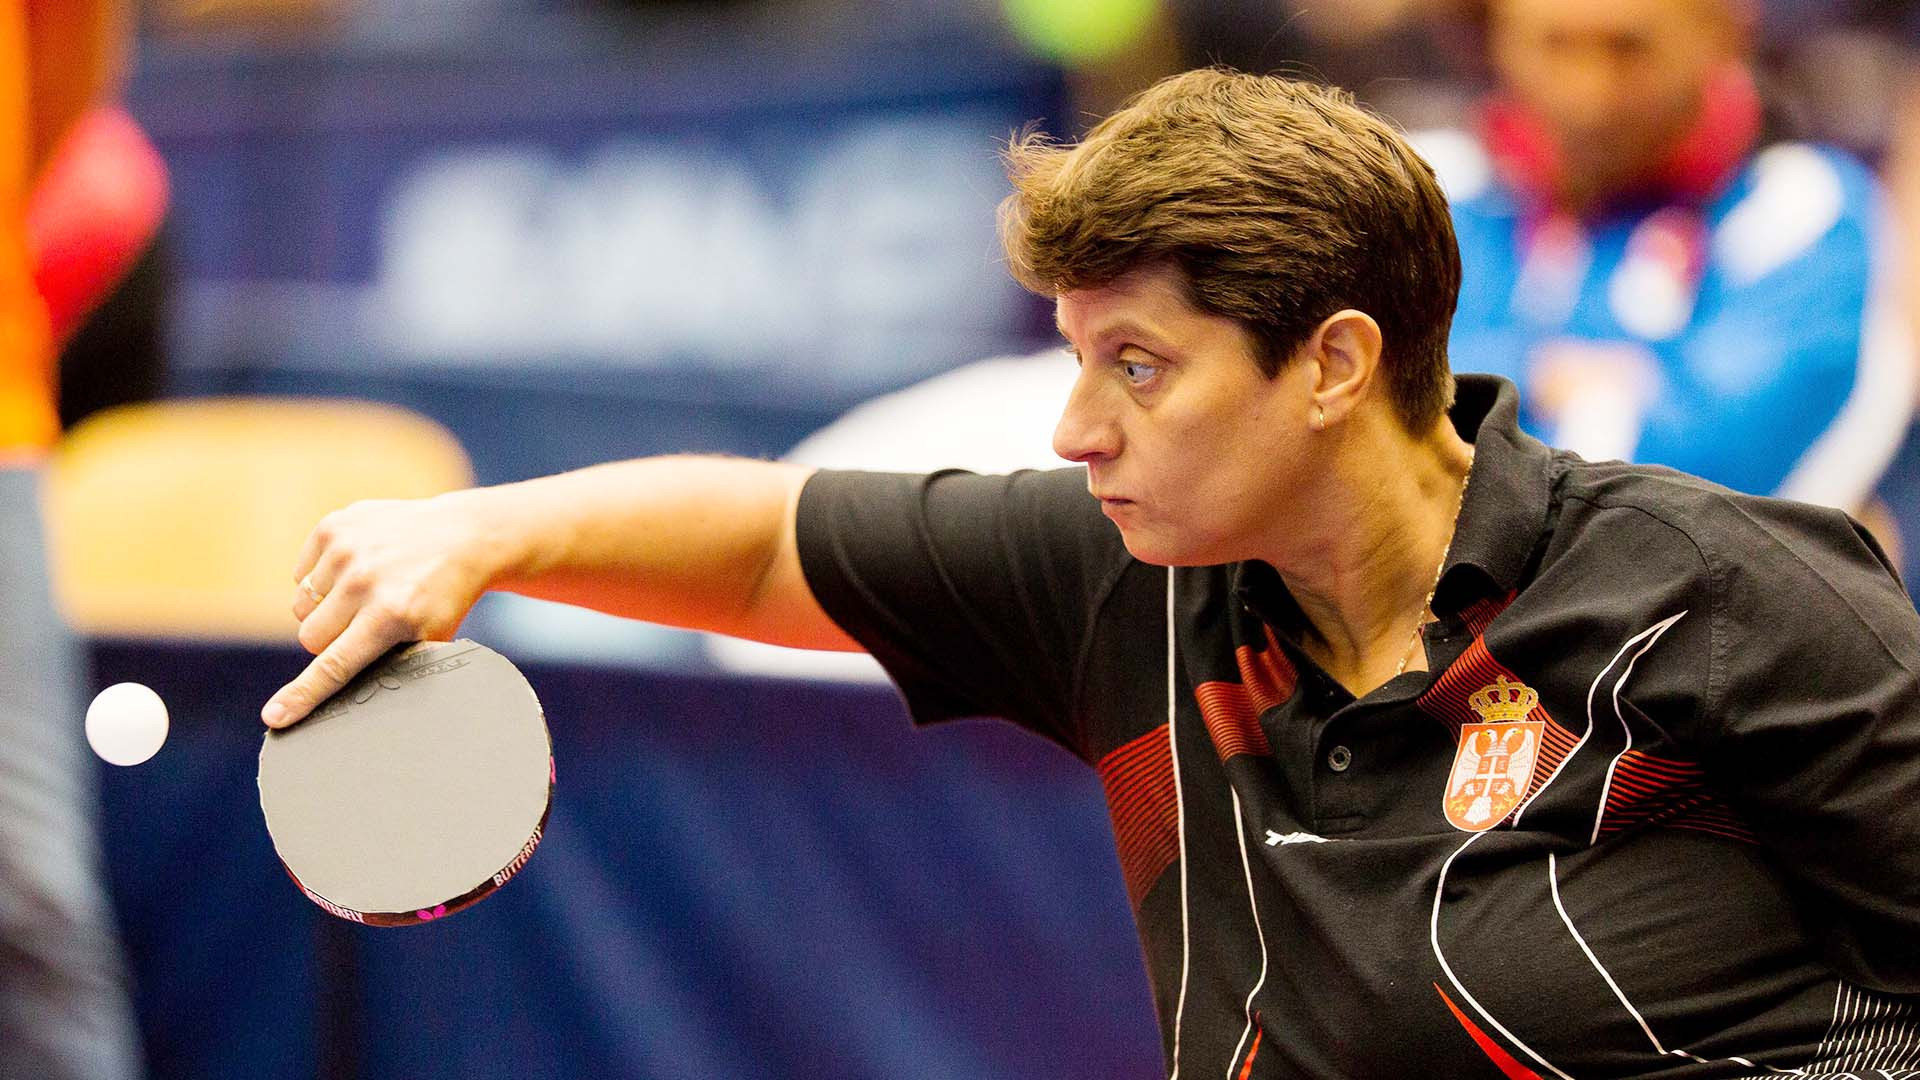 Rio 2016 champion adds team gold to individual success at European Para Table Tennis Championships